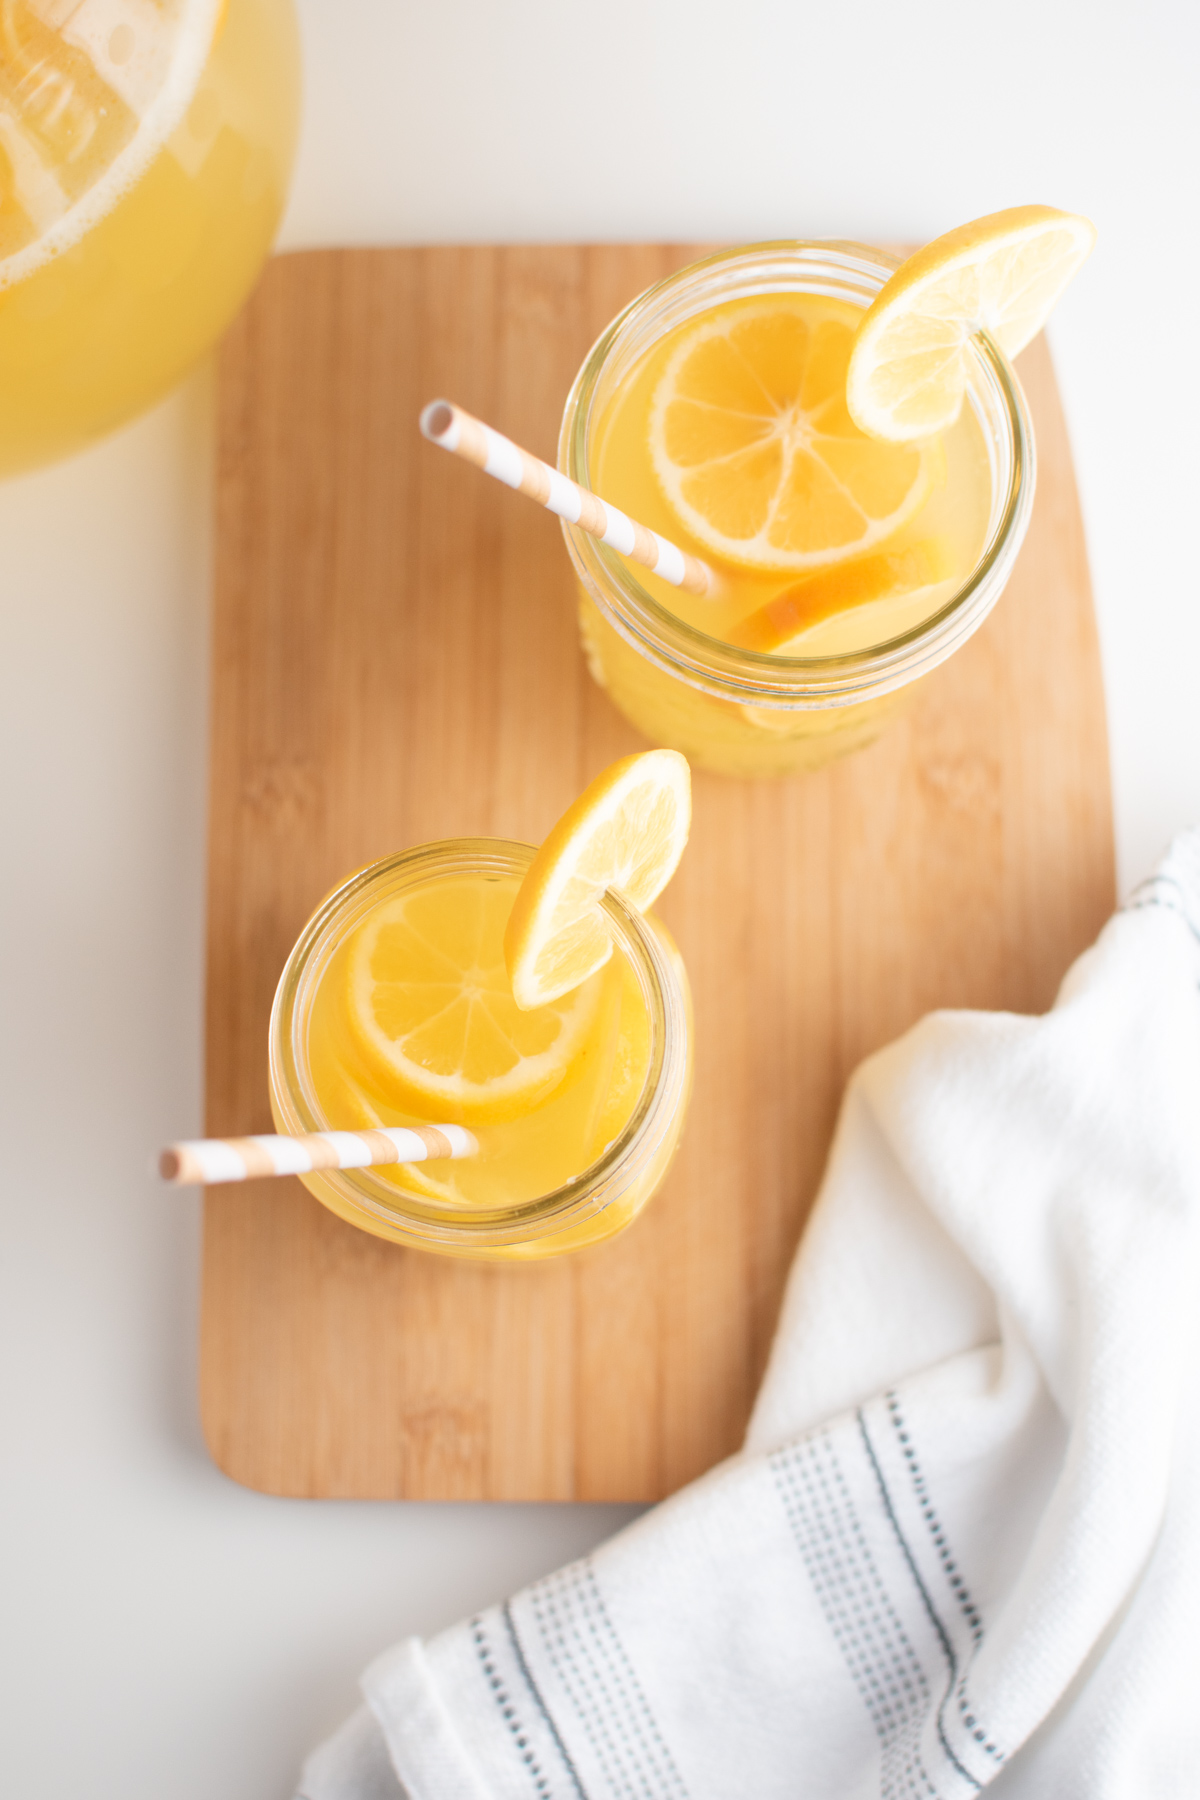 Lemonade with Meyer lemons in glass mason jar cups on cutting board.